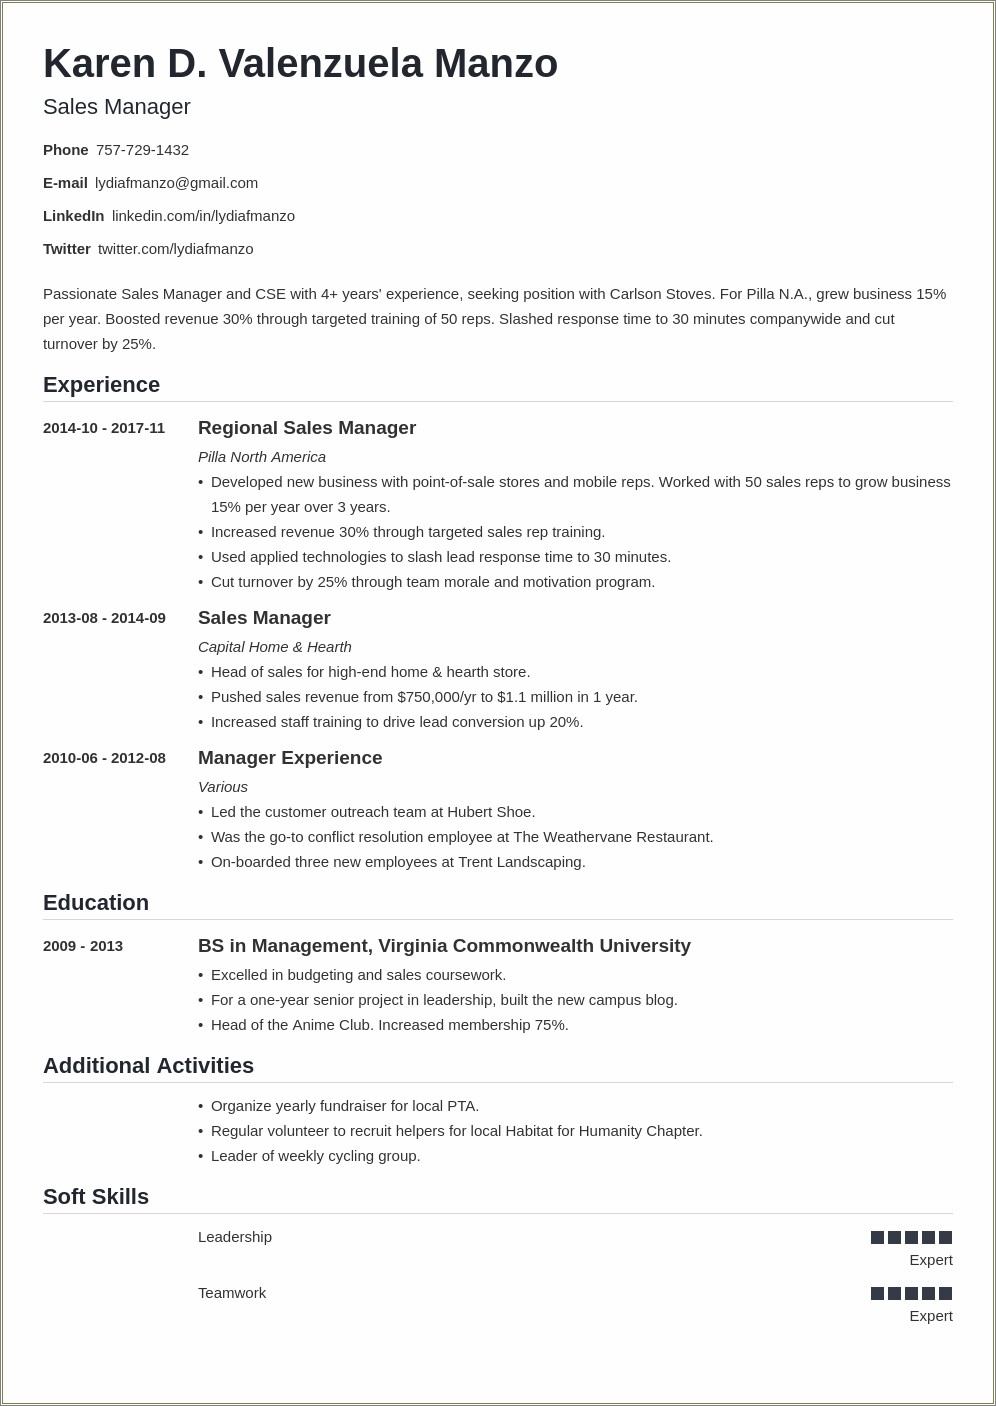 Chipotle Crew Member Job Description Resume